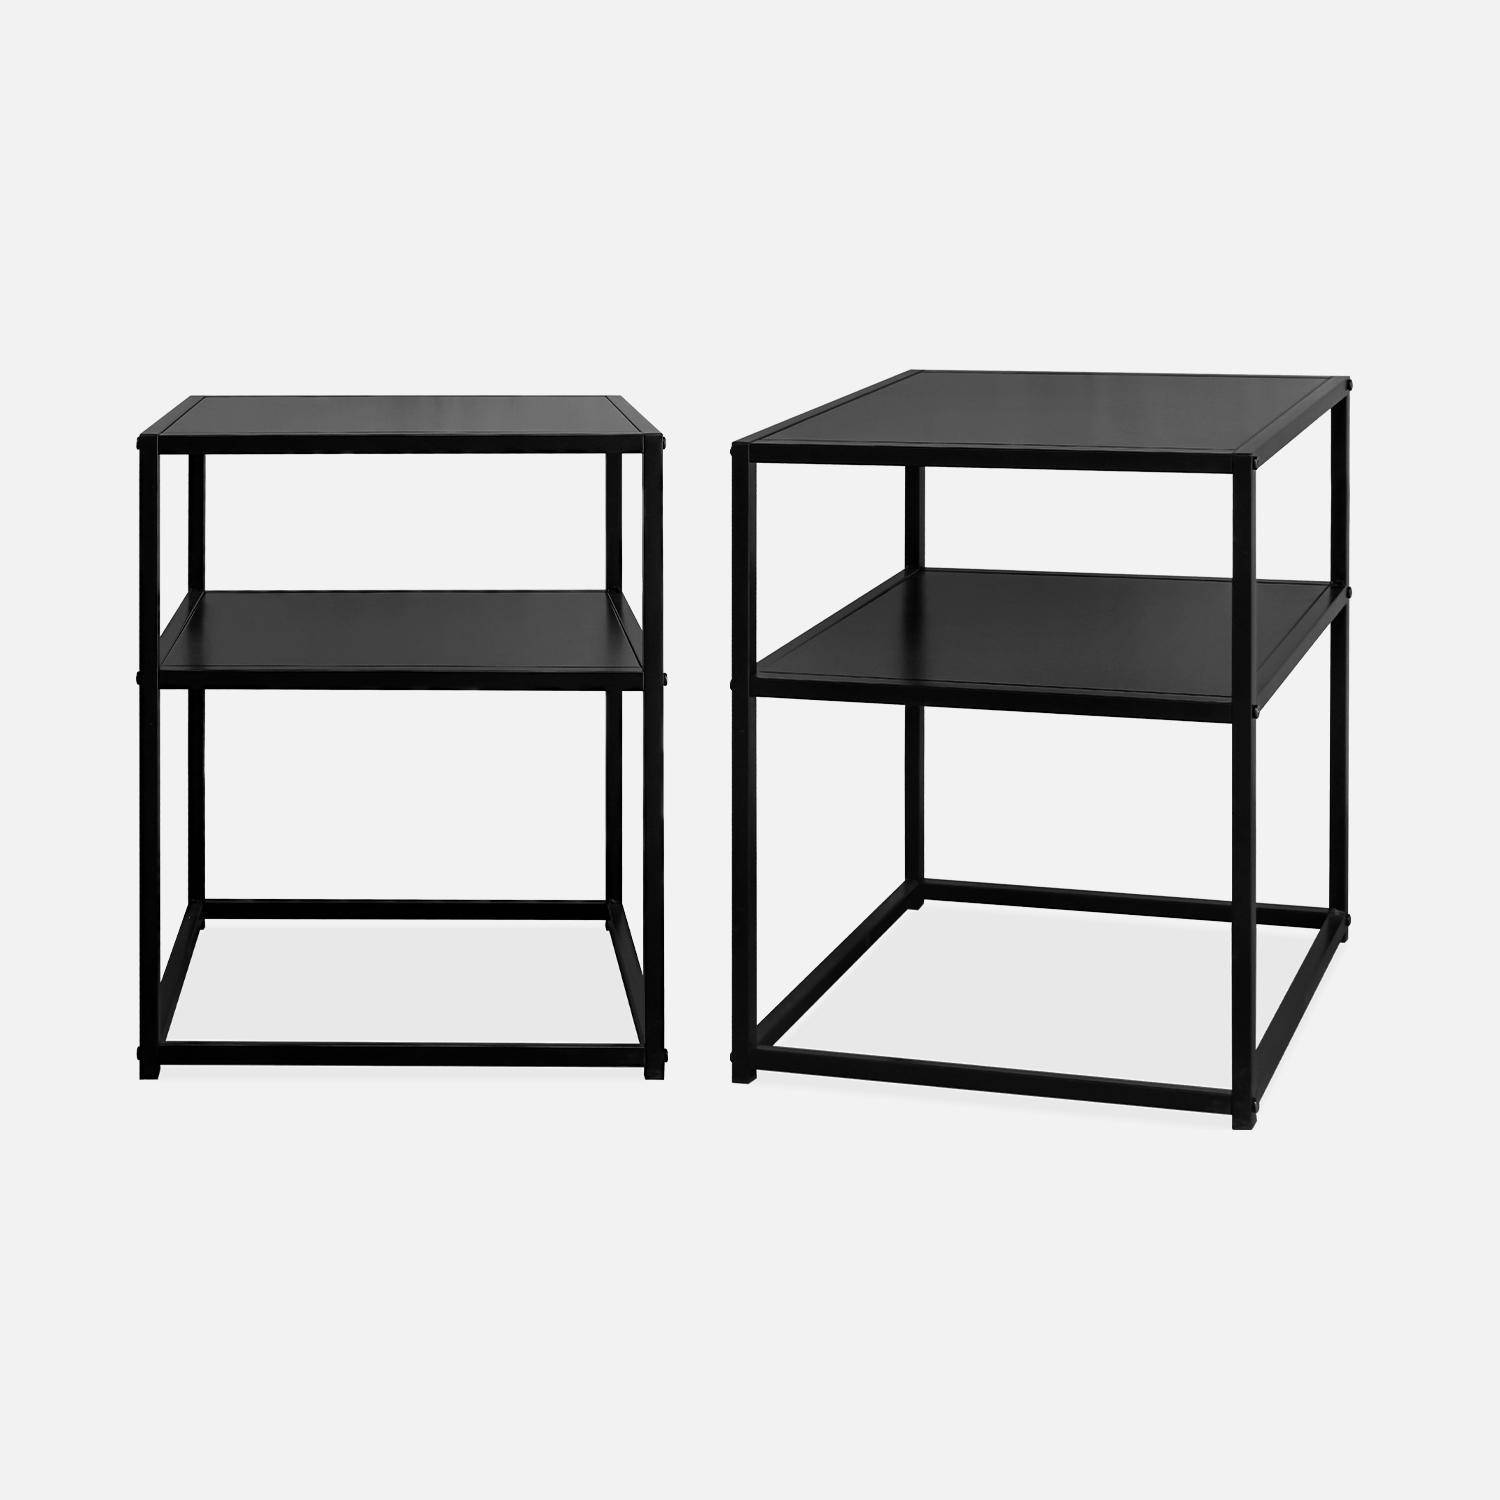 Set of 2 black metal bedside tables, 1 shelf, INDUSTRIAL L43xW40xH52cm Photo4